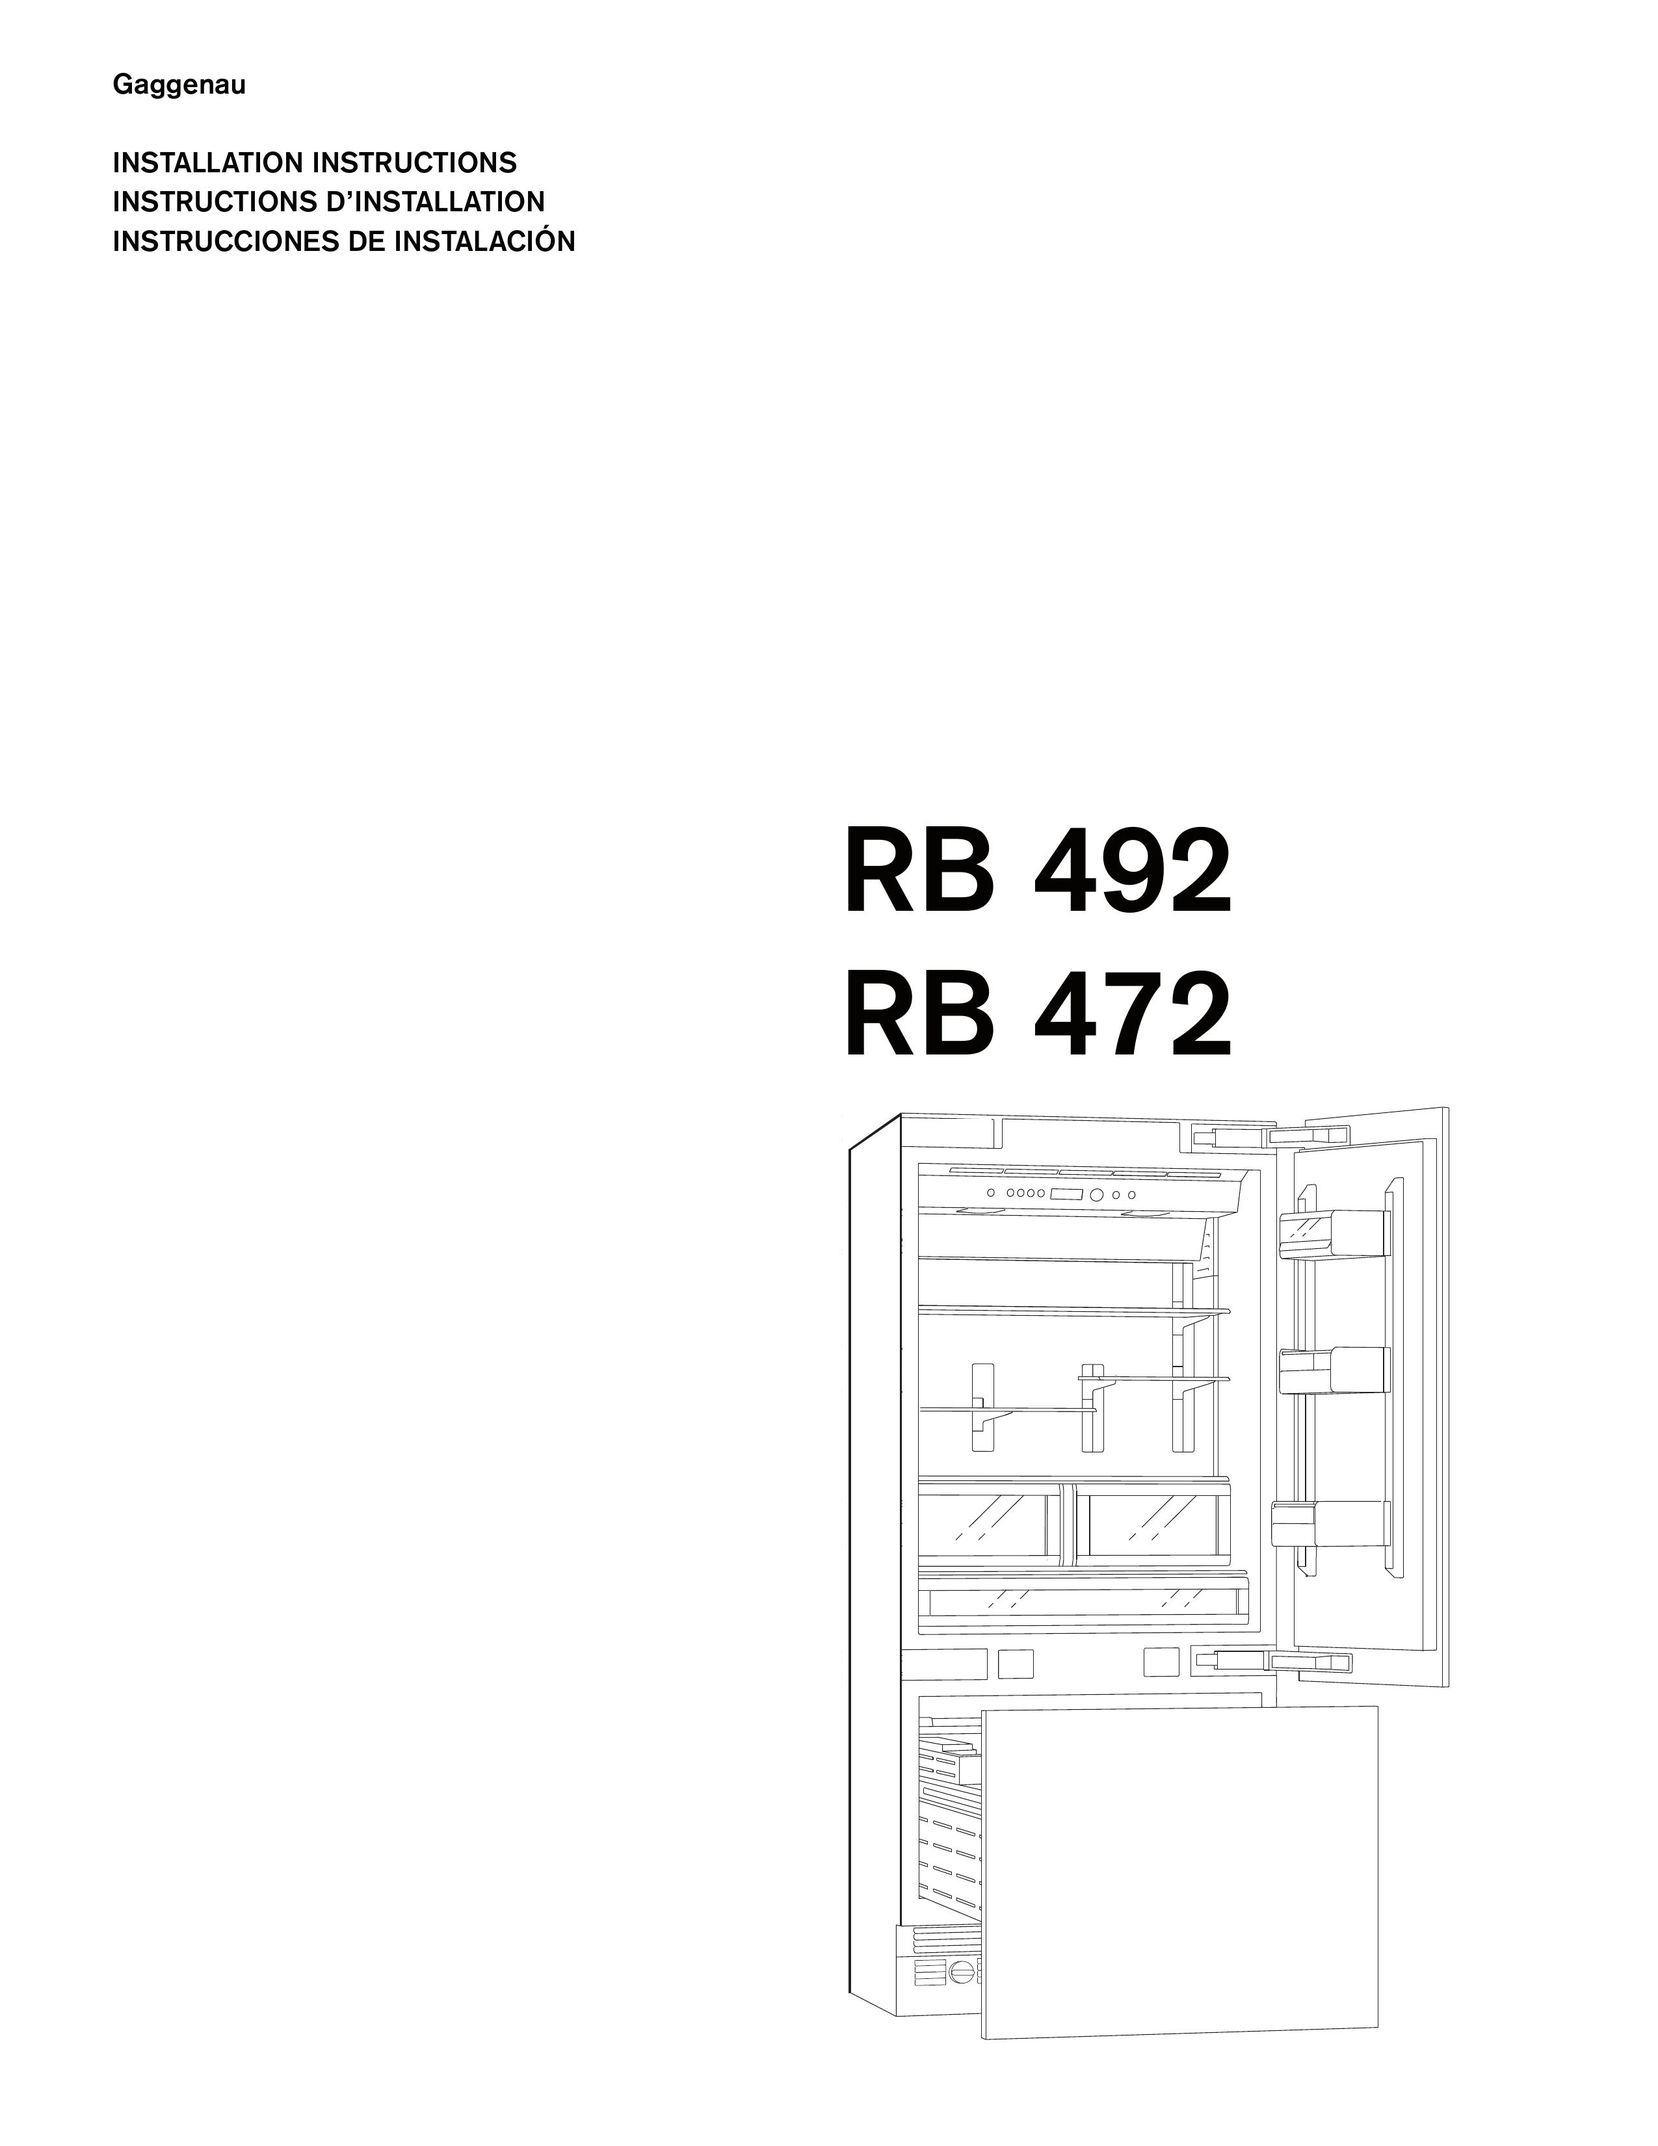 Gaggenau RB 492 Freezer User Manual